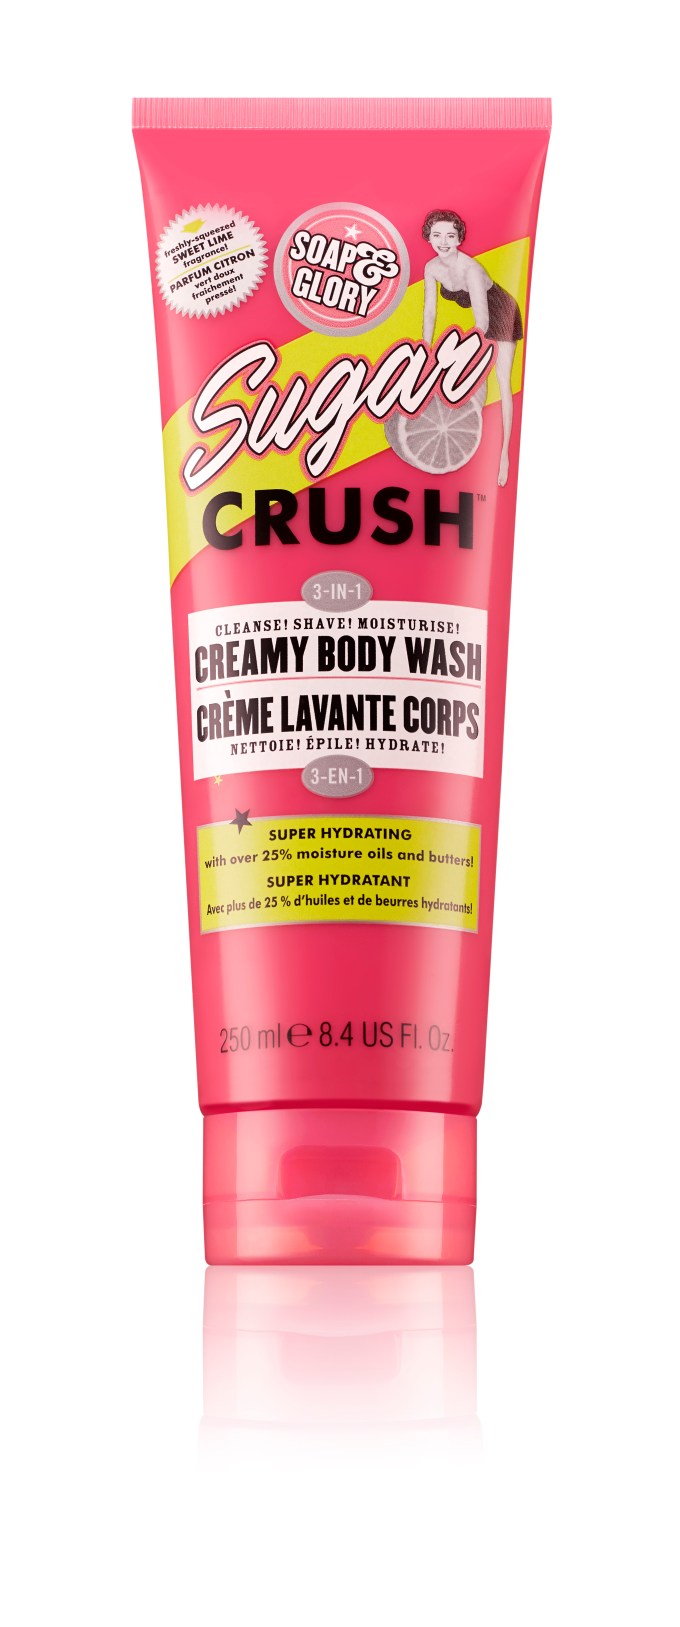 Soap & Glory Sugar Crush3 in 1 Creamy Body Wash